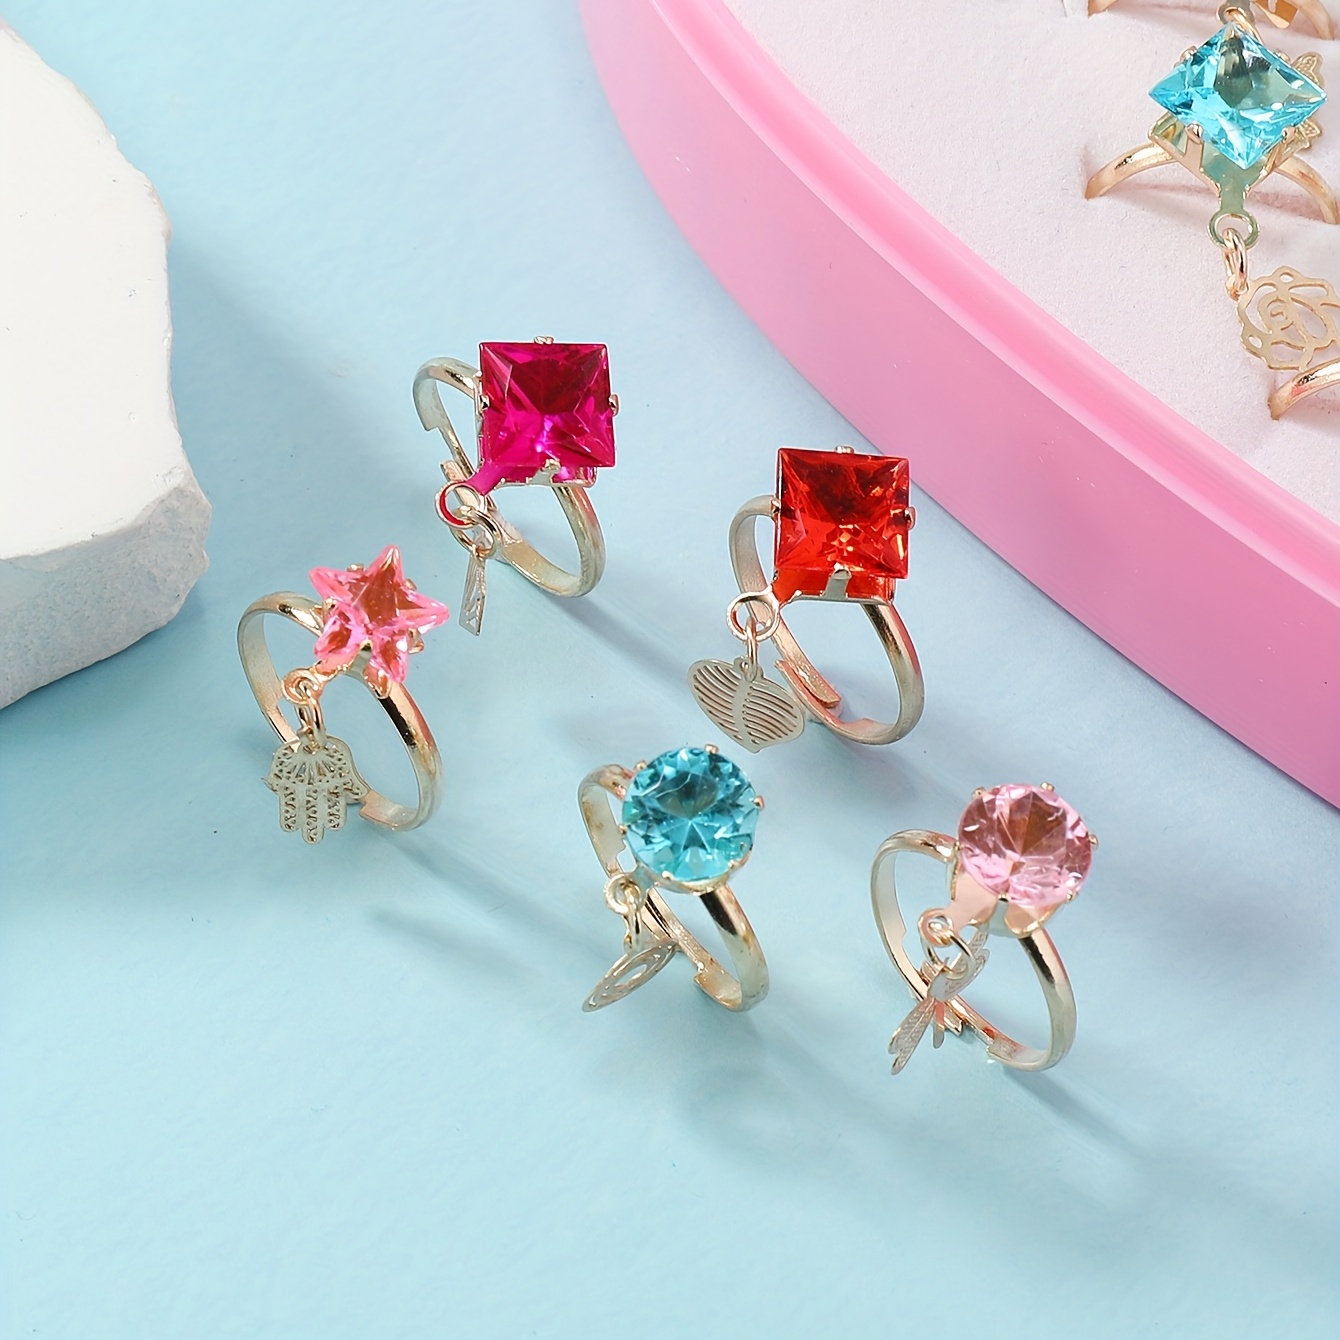 Order kids' jewelry with gemstones